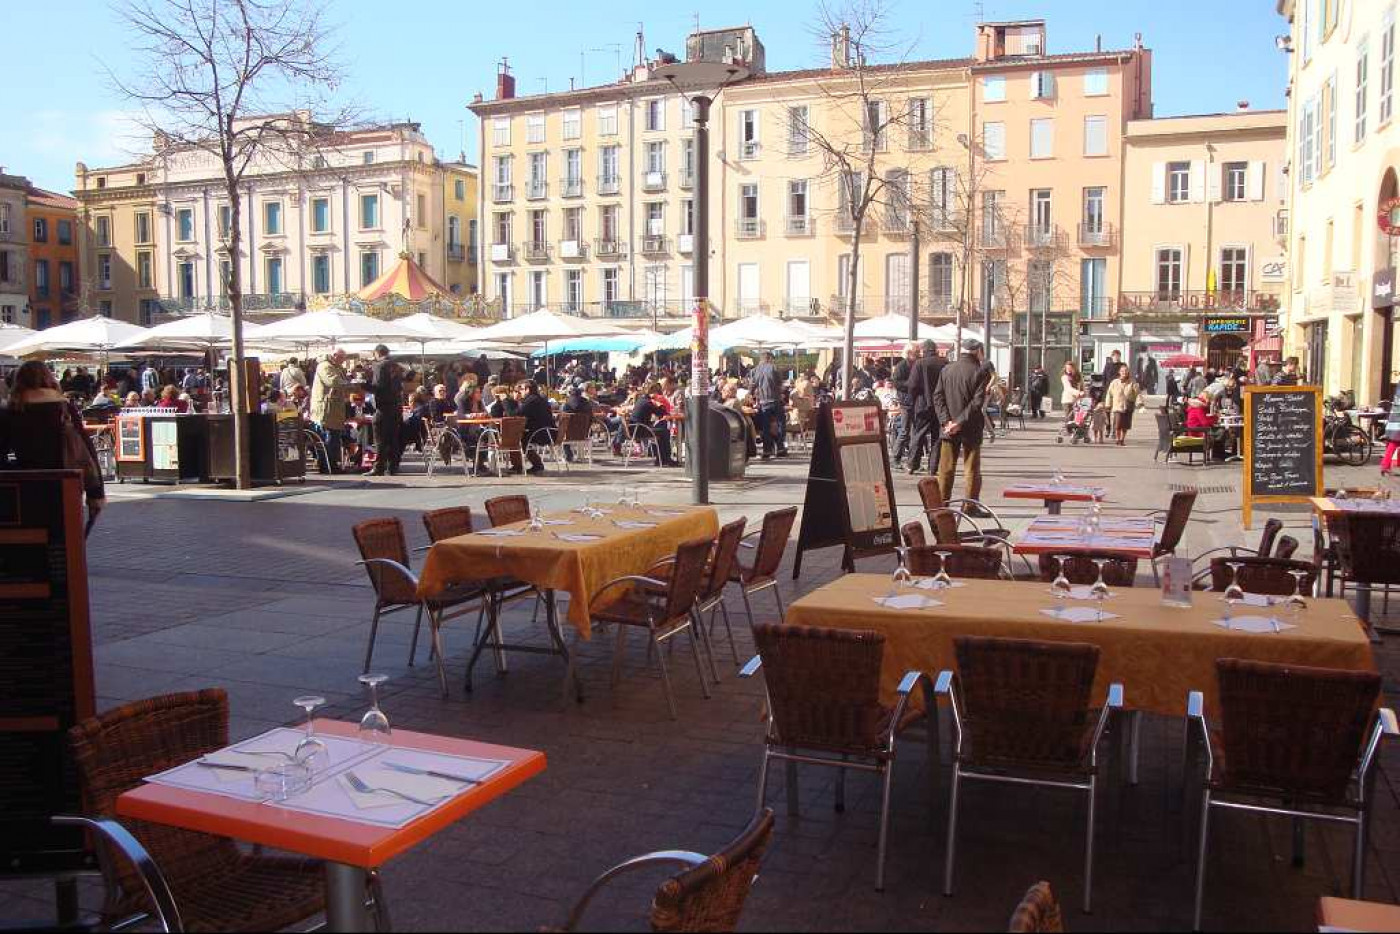 à vendre Café   restaurant Perpignan